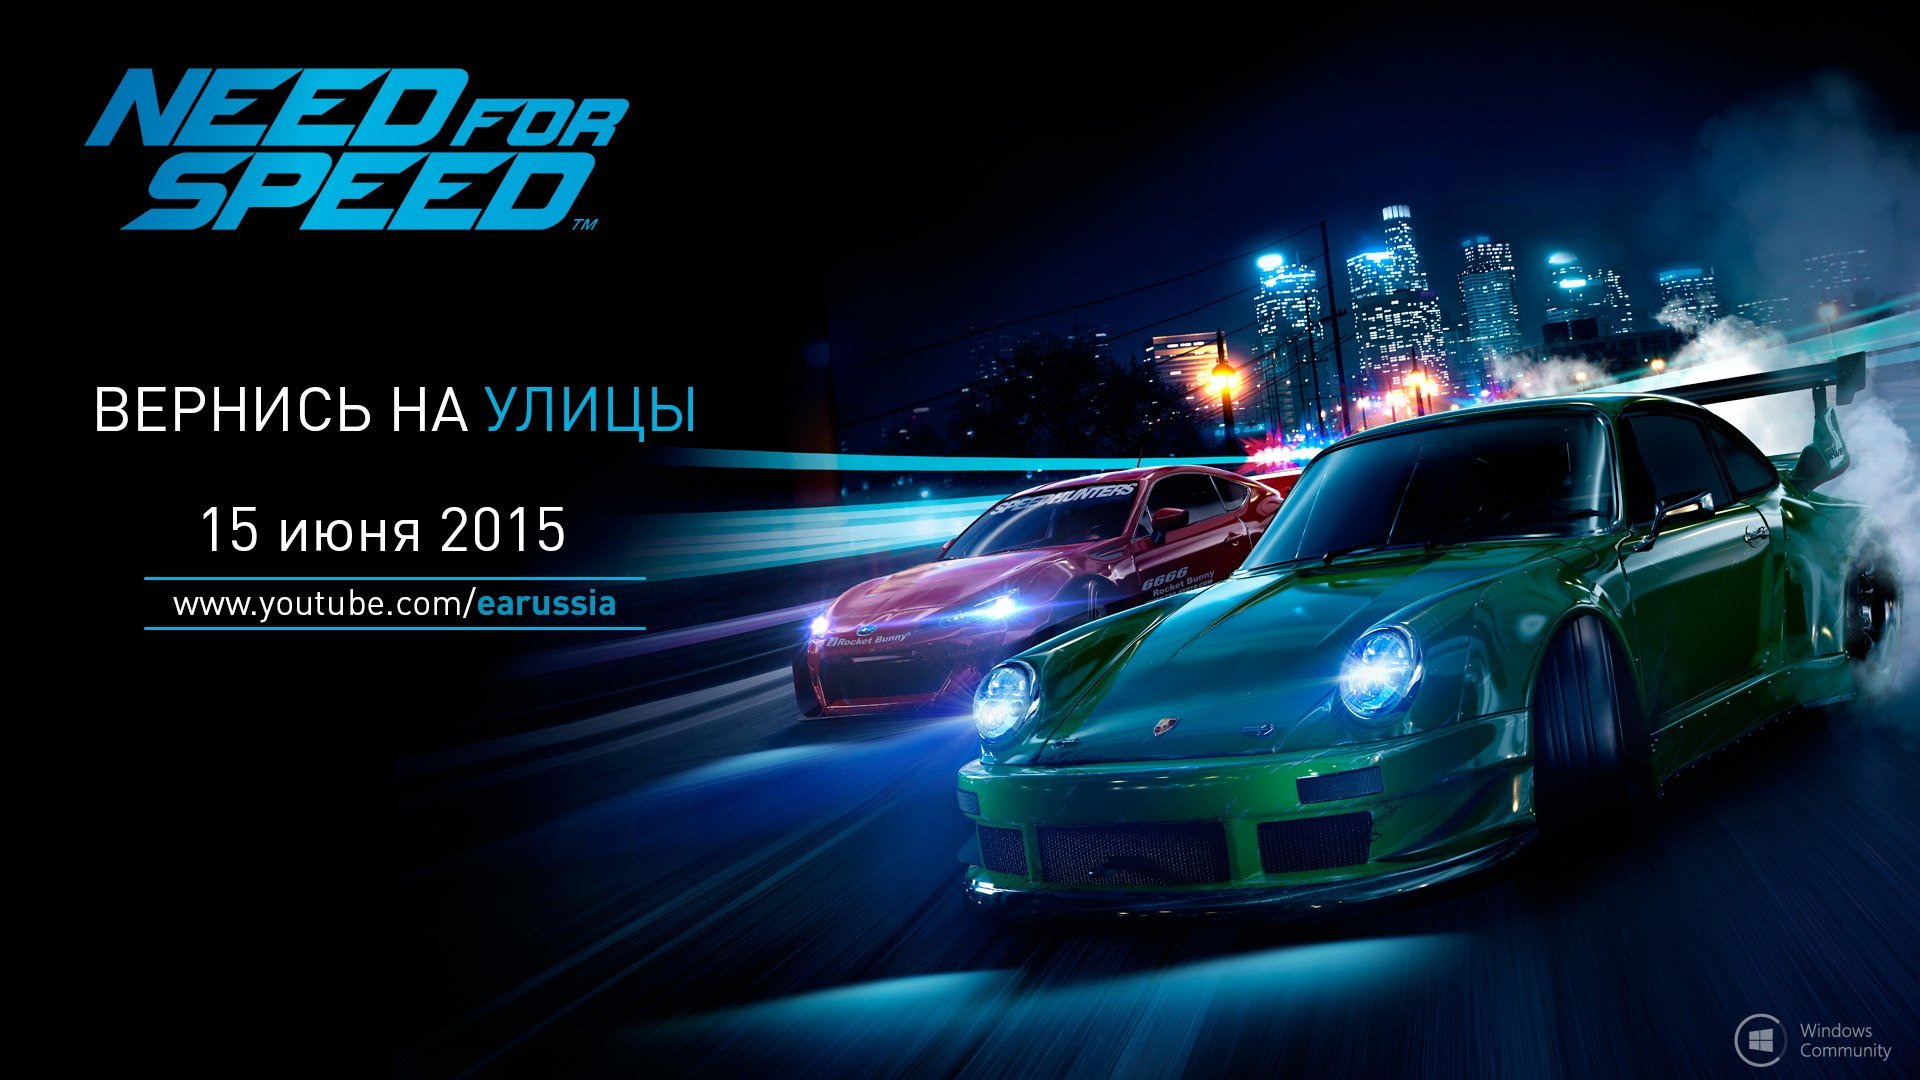 Need for Speed серия 2015